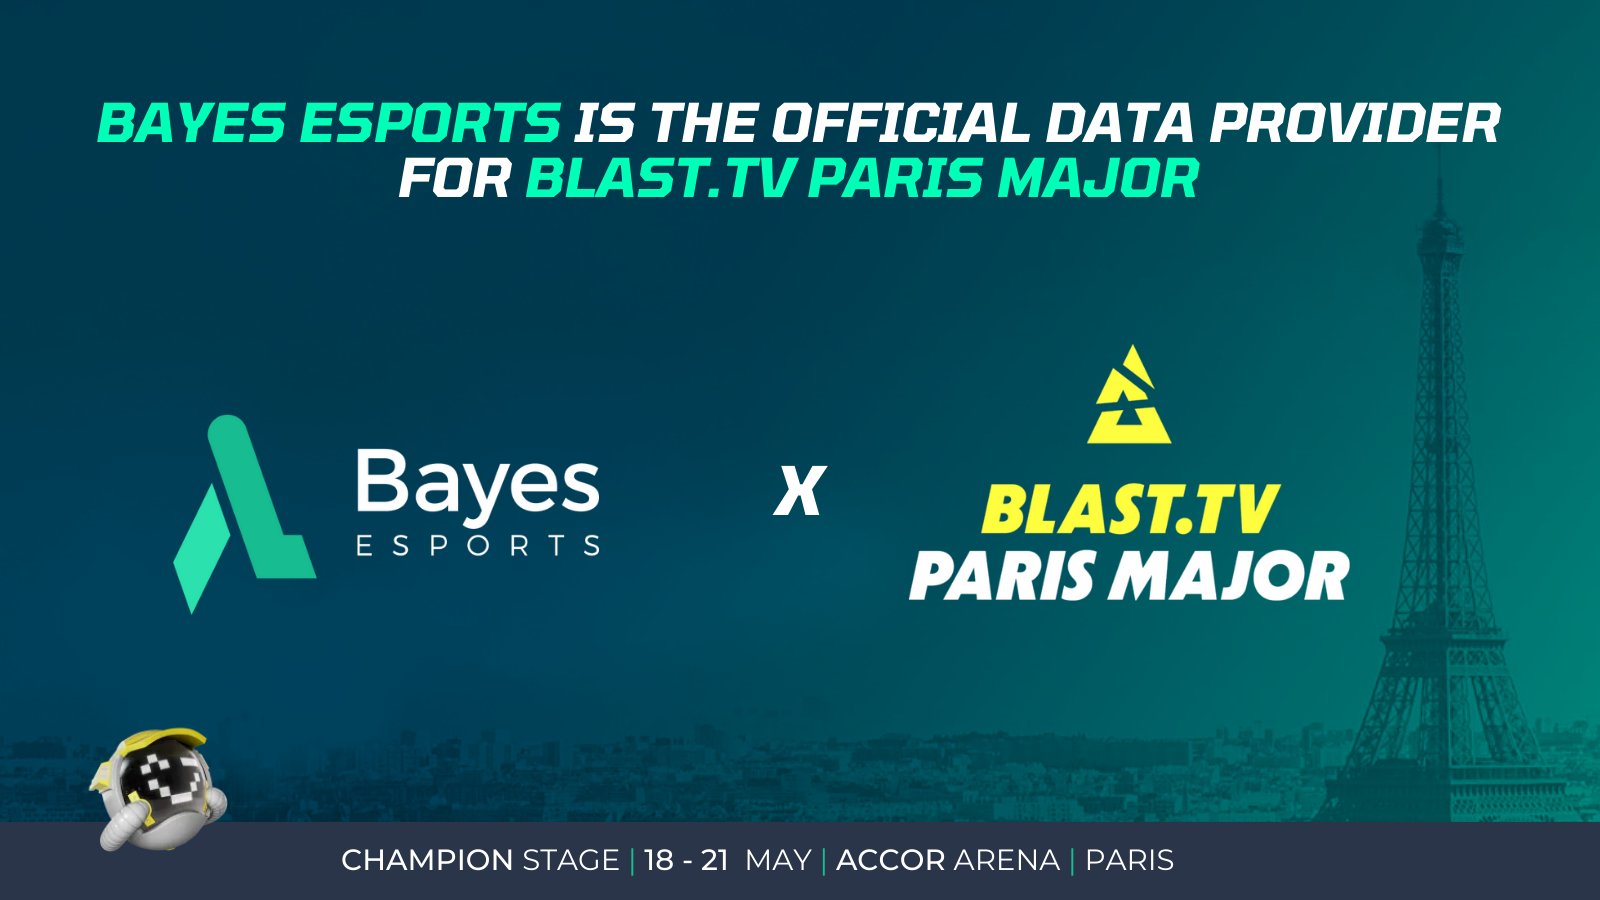 Blast CS:GO Major heading to Paris in 2023 - SportsPro